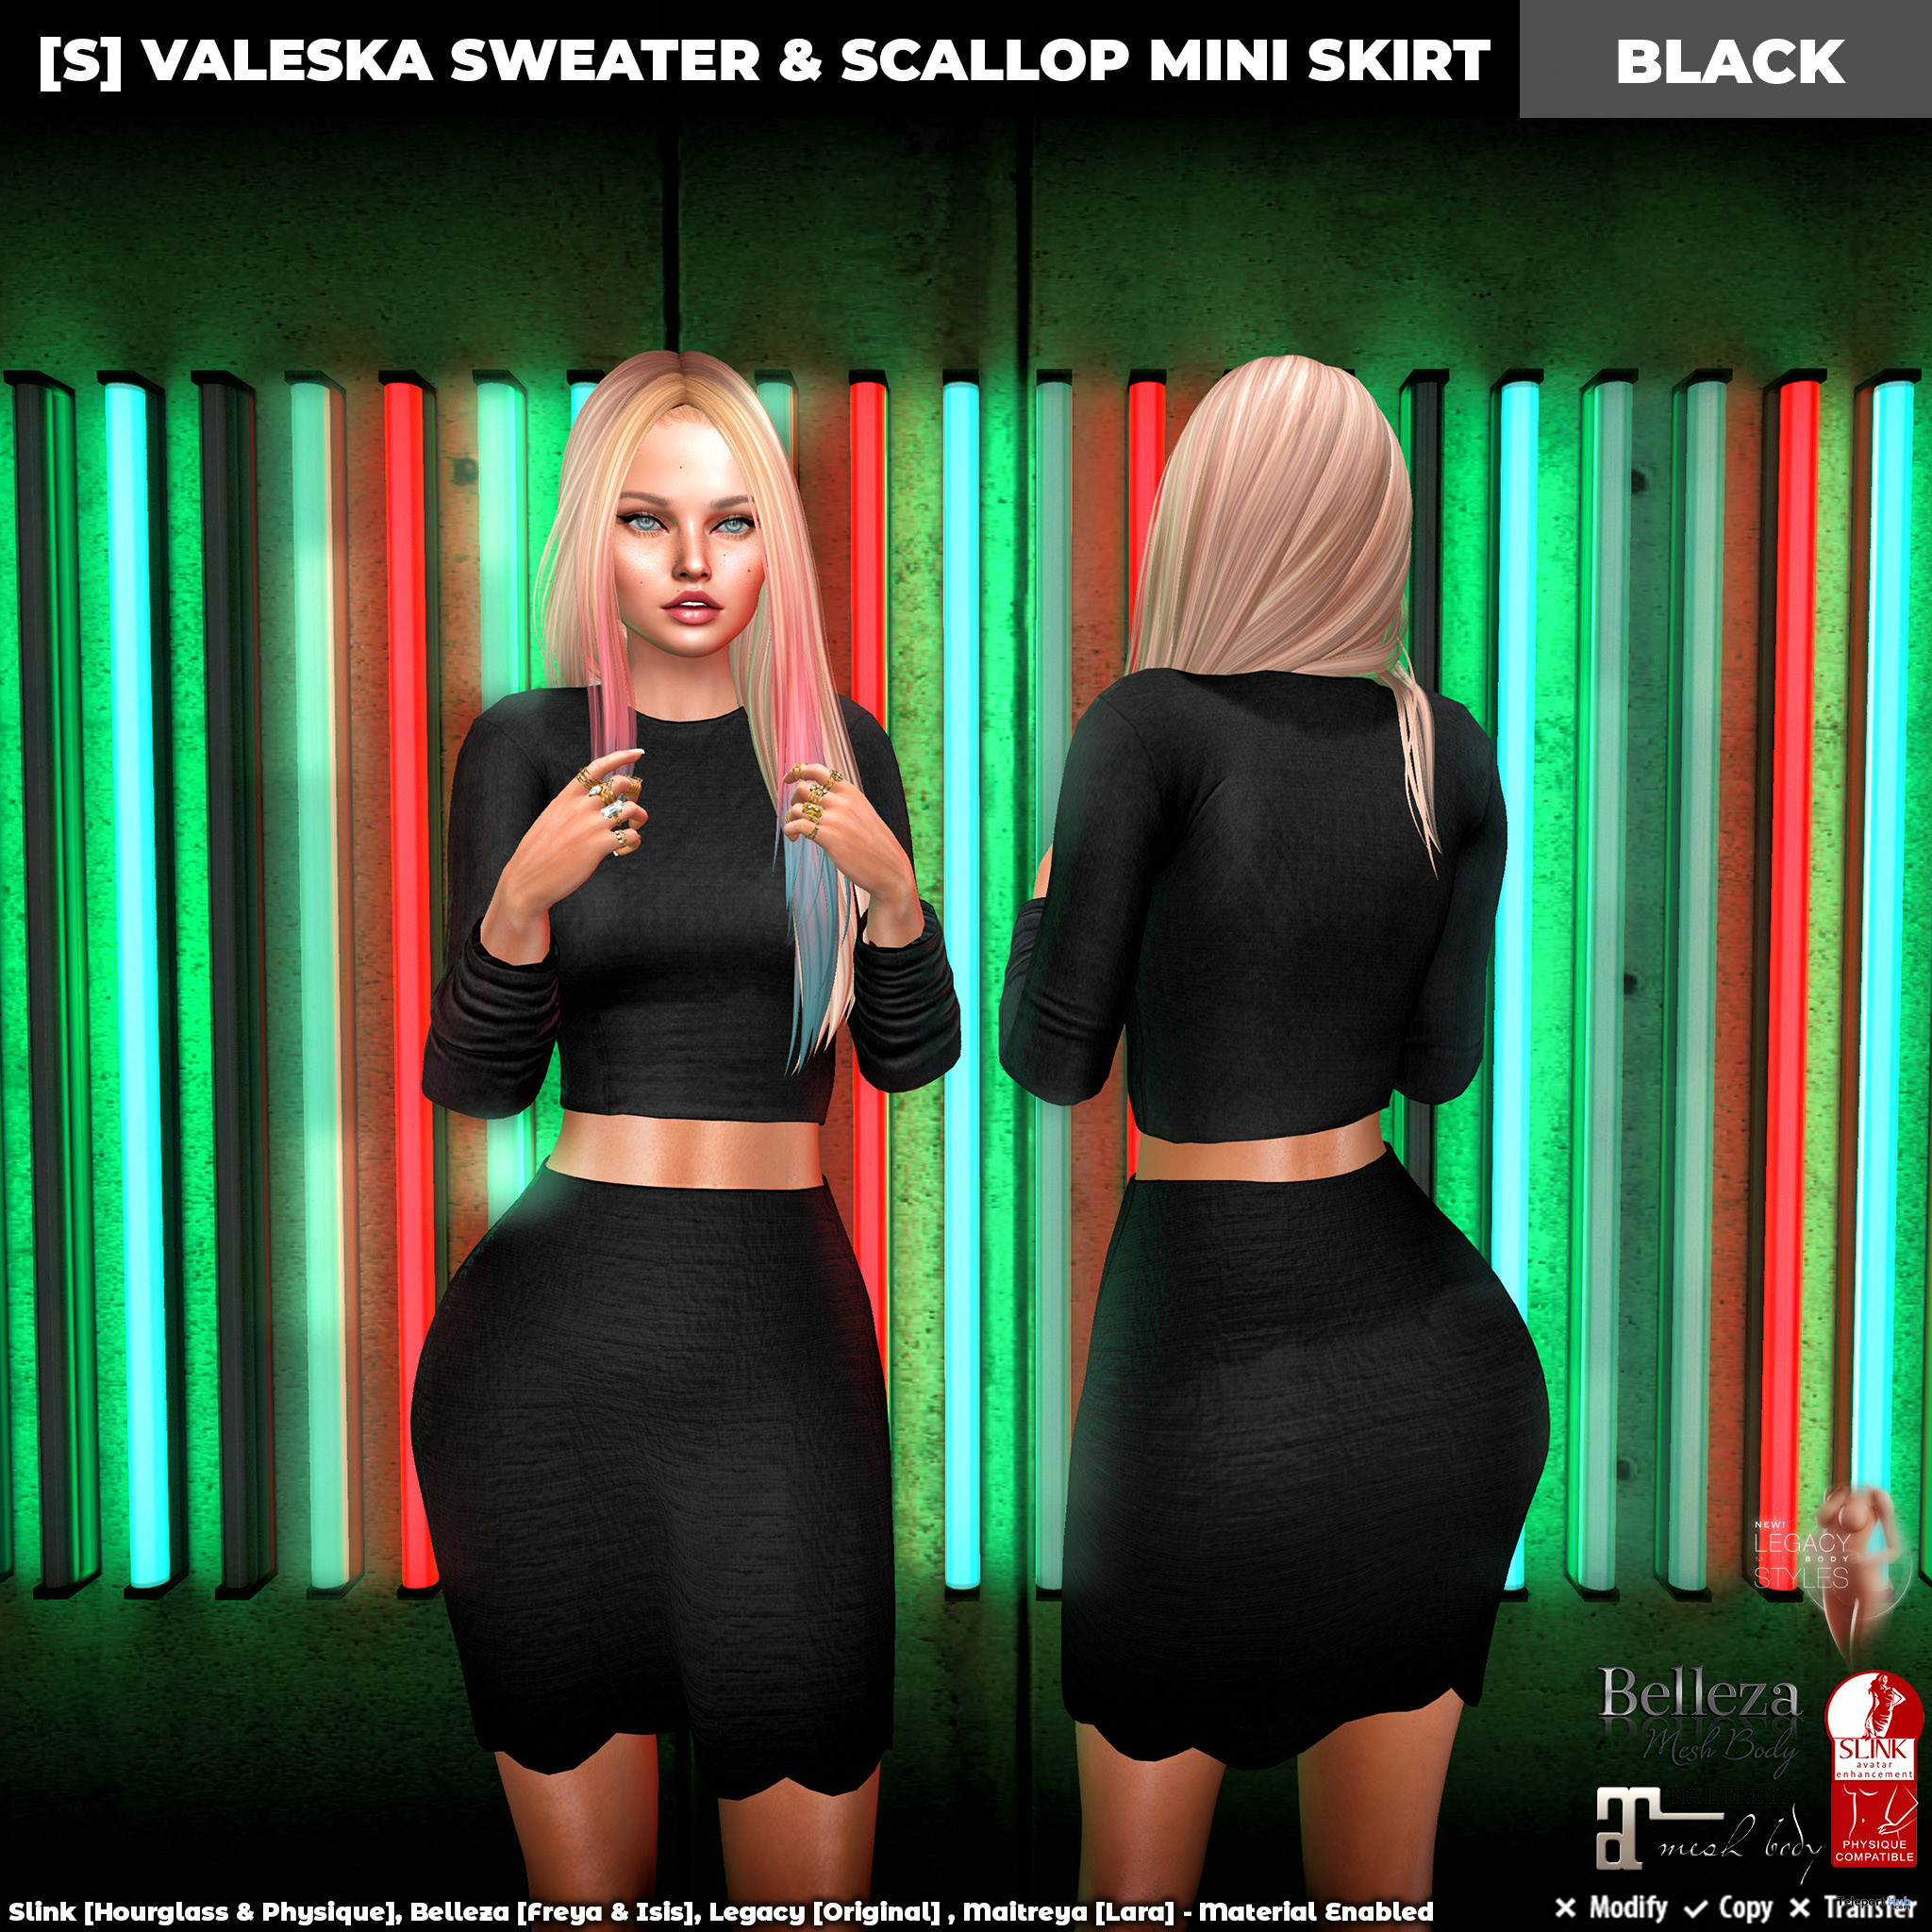 New Release: [S] Valeska Sweater & Scallop Mini Skirt by [satus Inc] - Teleport Hub - teleporthub.com